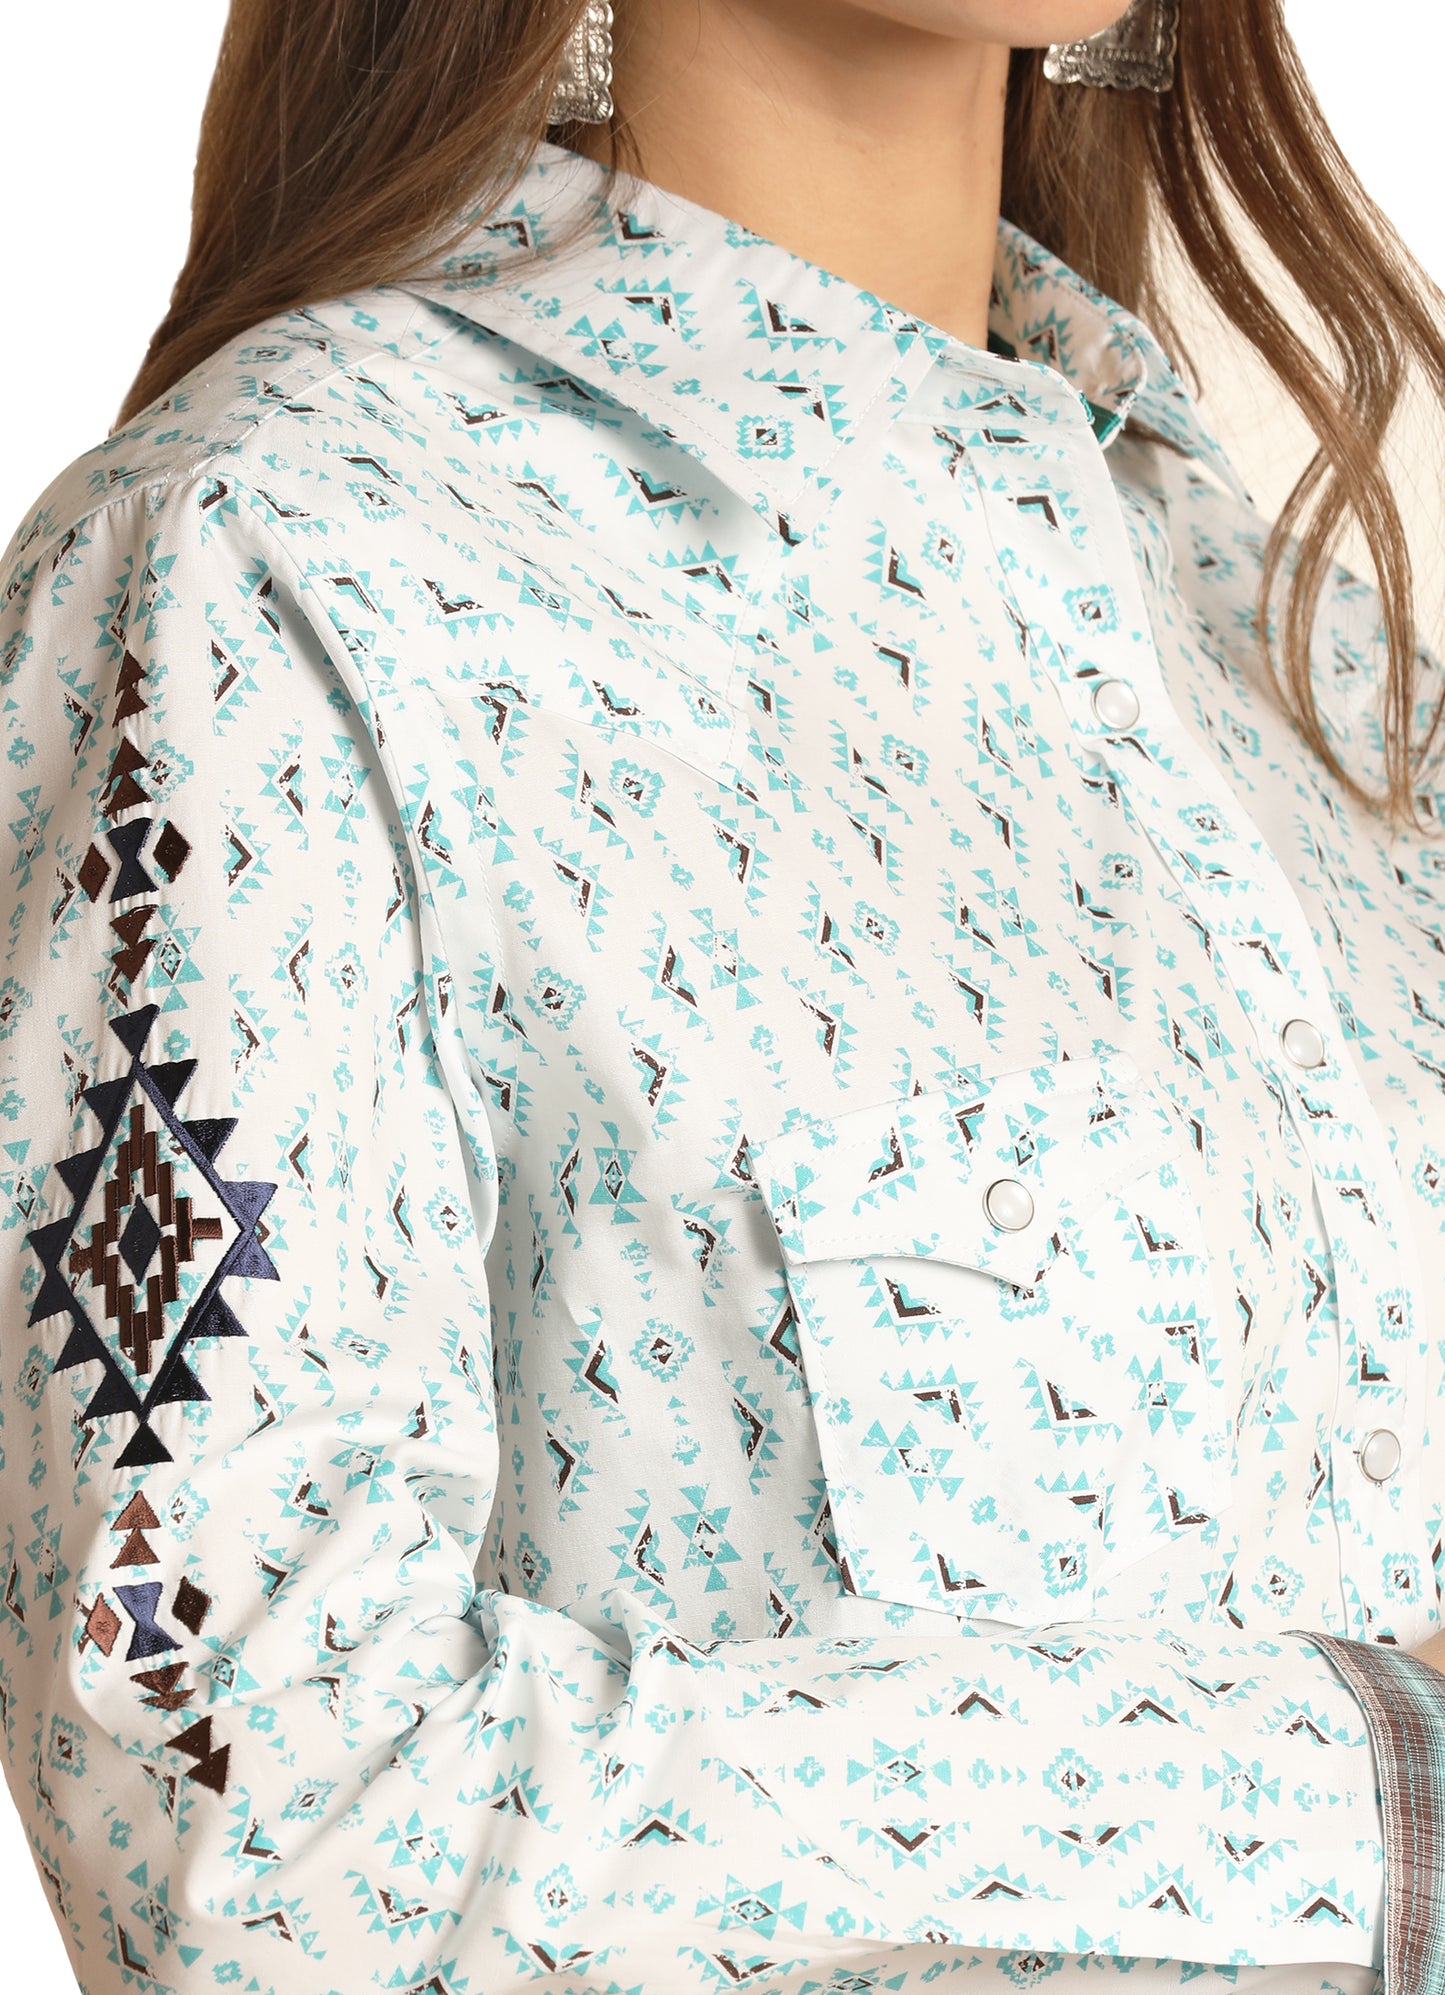 Rock & Roll Panhandle Women's Aztec Stripe Print Long Sleeve Snap Shirt Turquoise